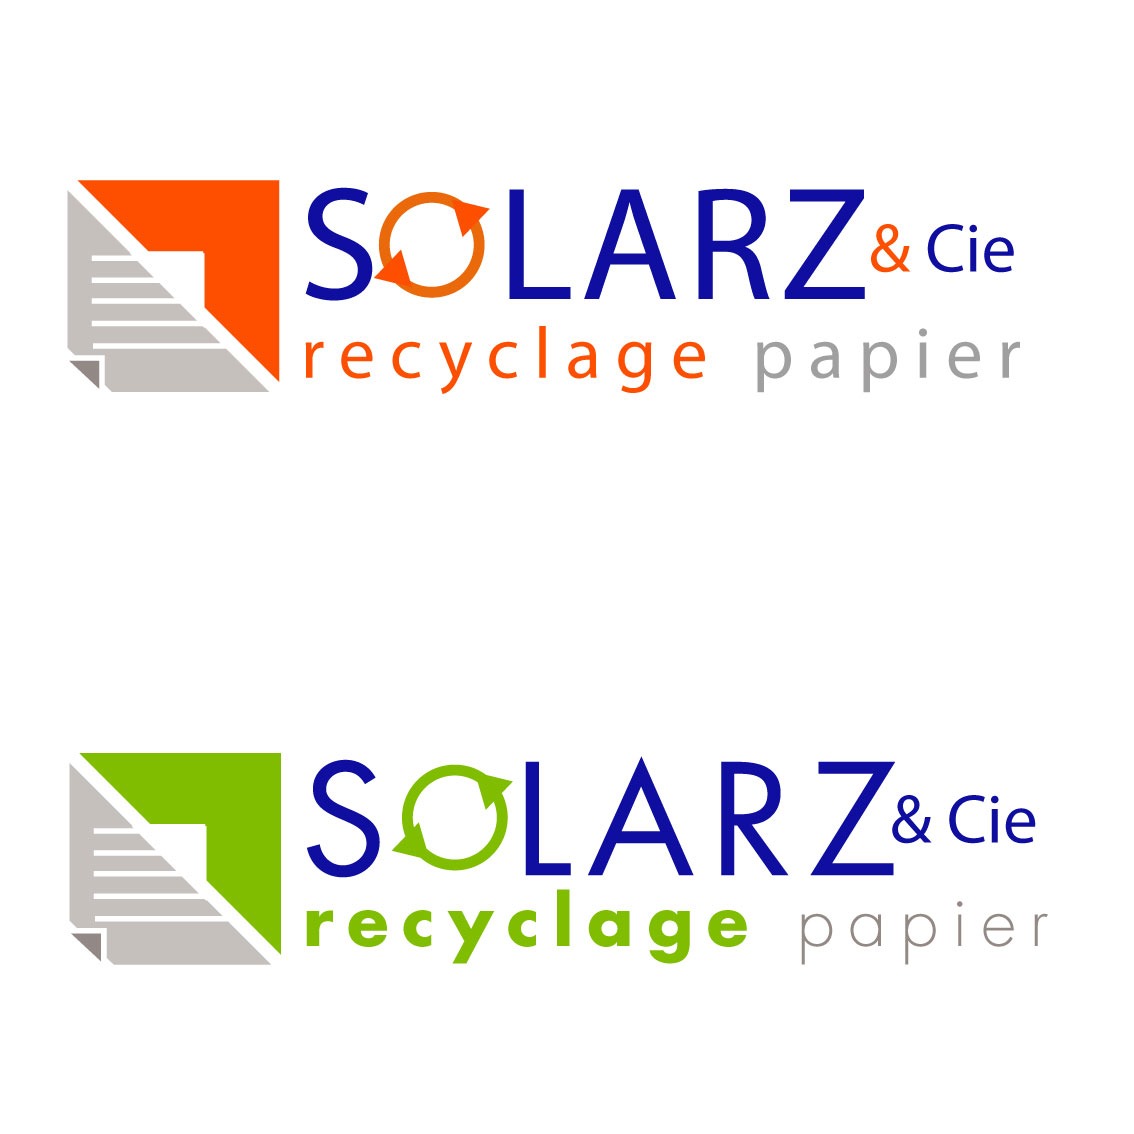 Recyclage papier Industriel